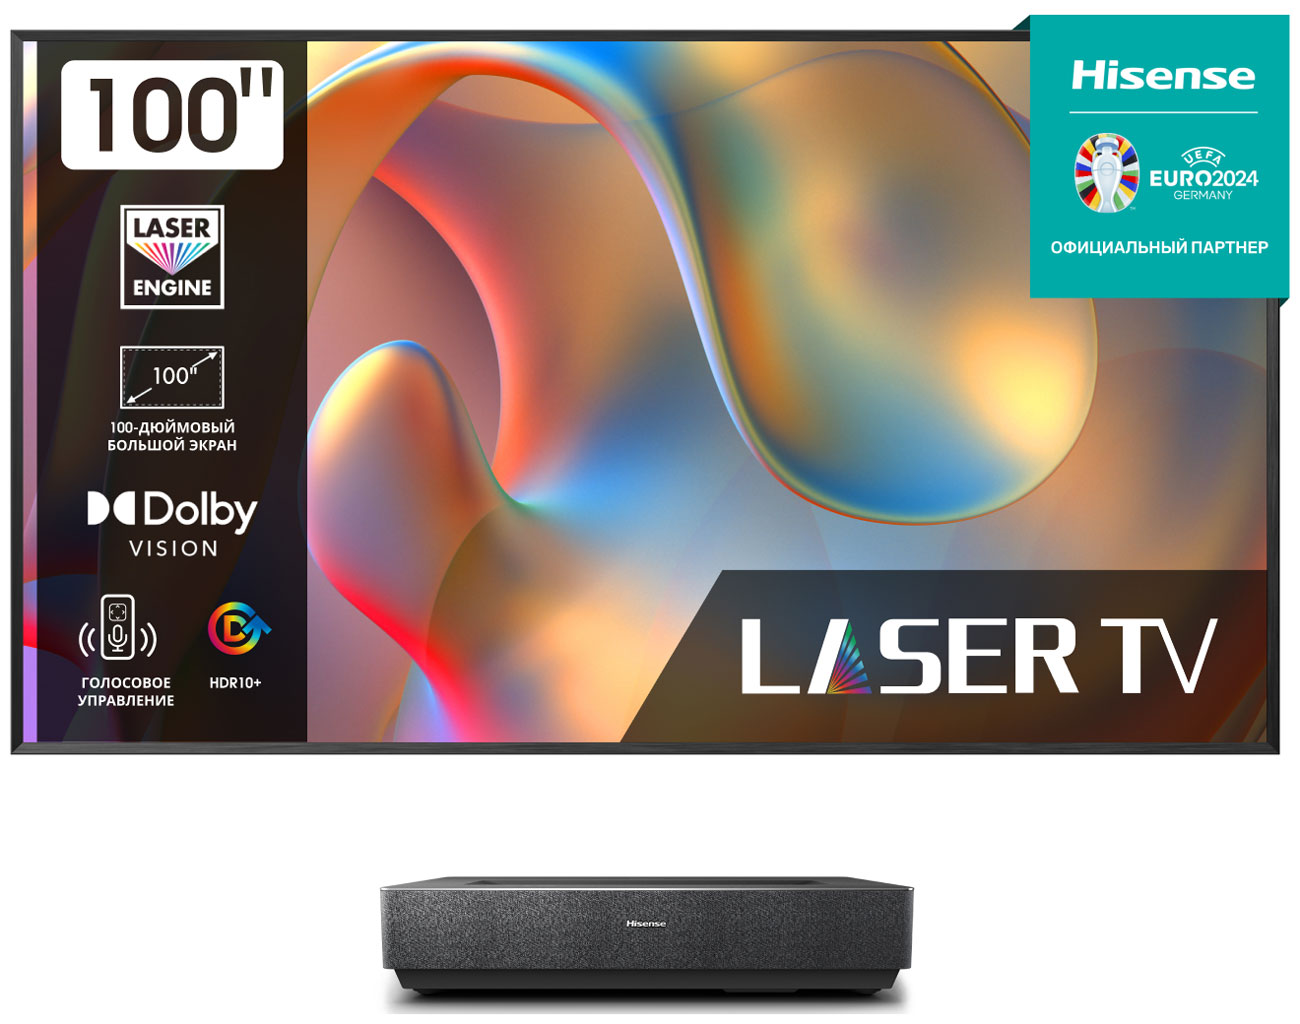 цена Телевизор HISENSE Lazer TV (100L5H)